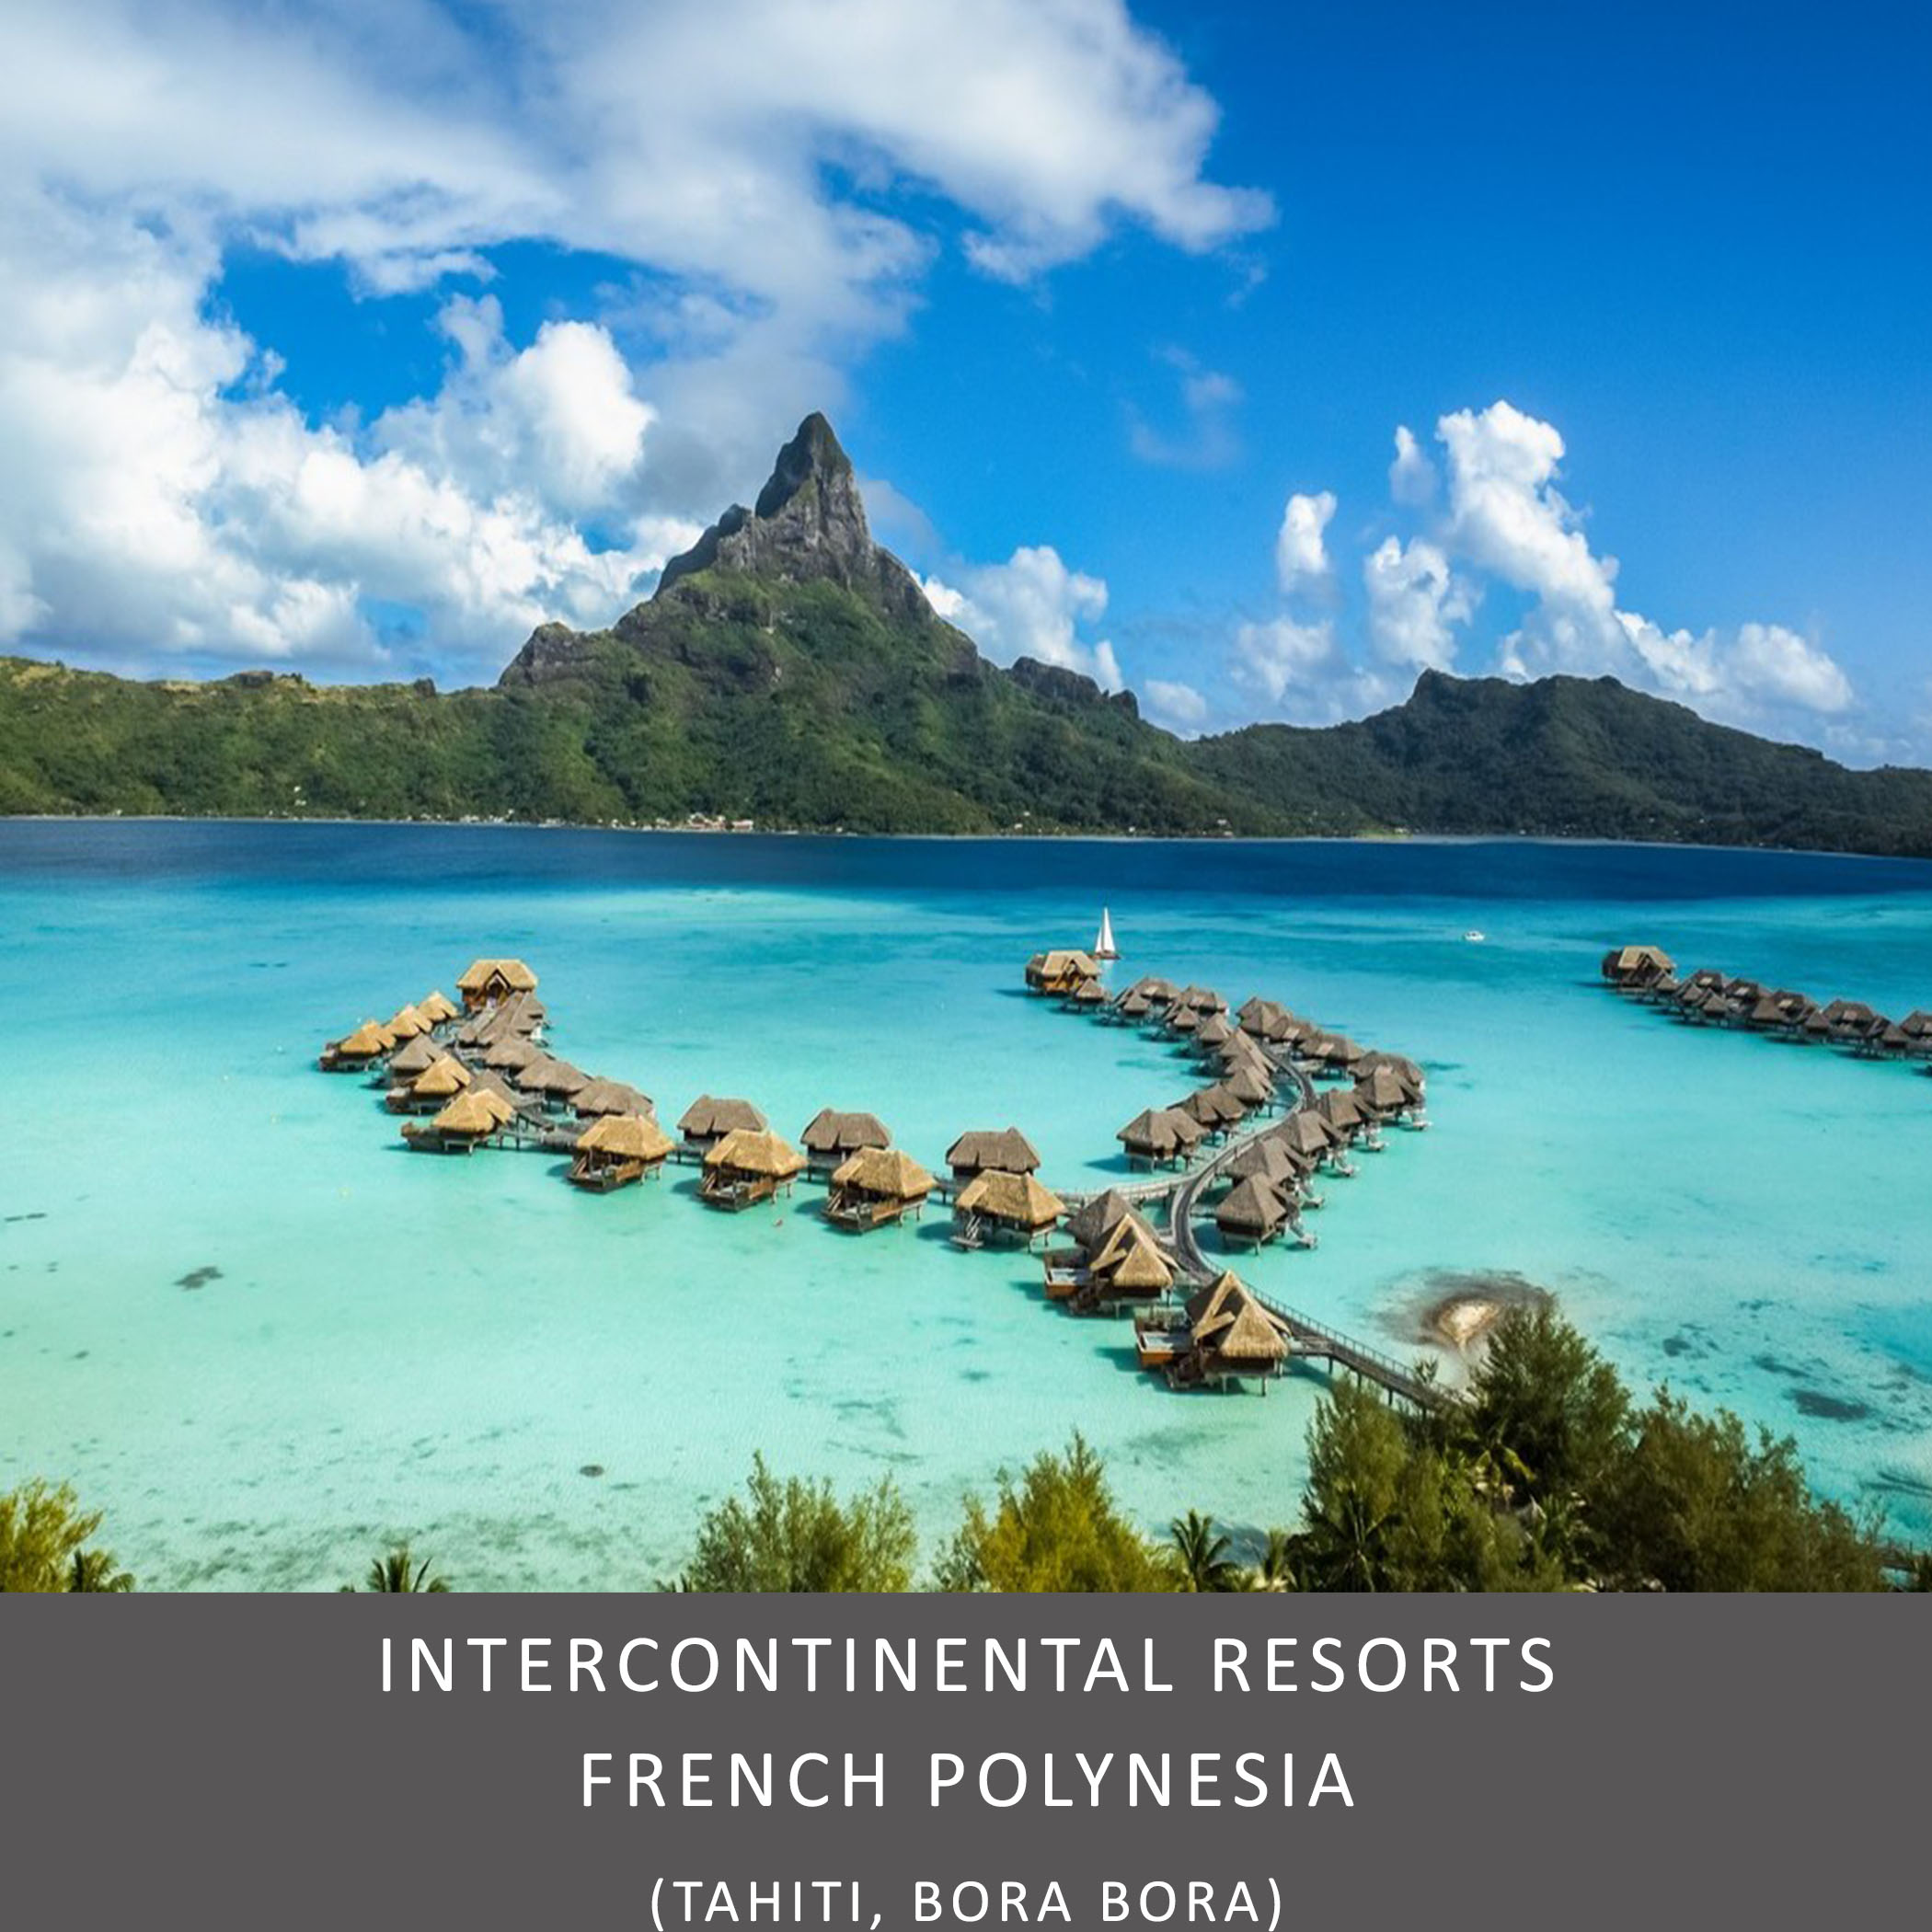 InterContinental French Polynesia